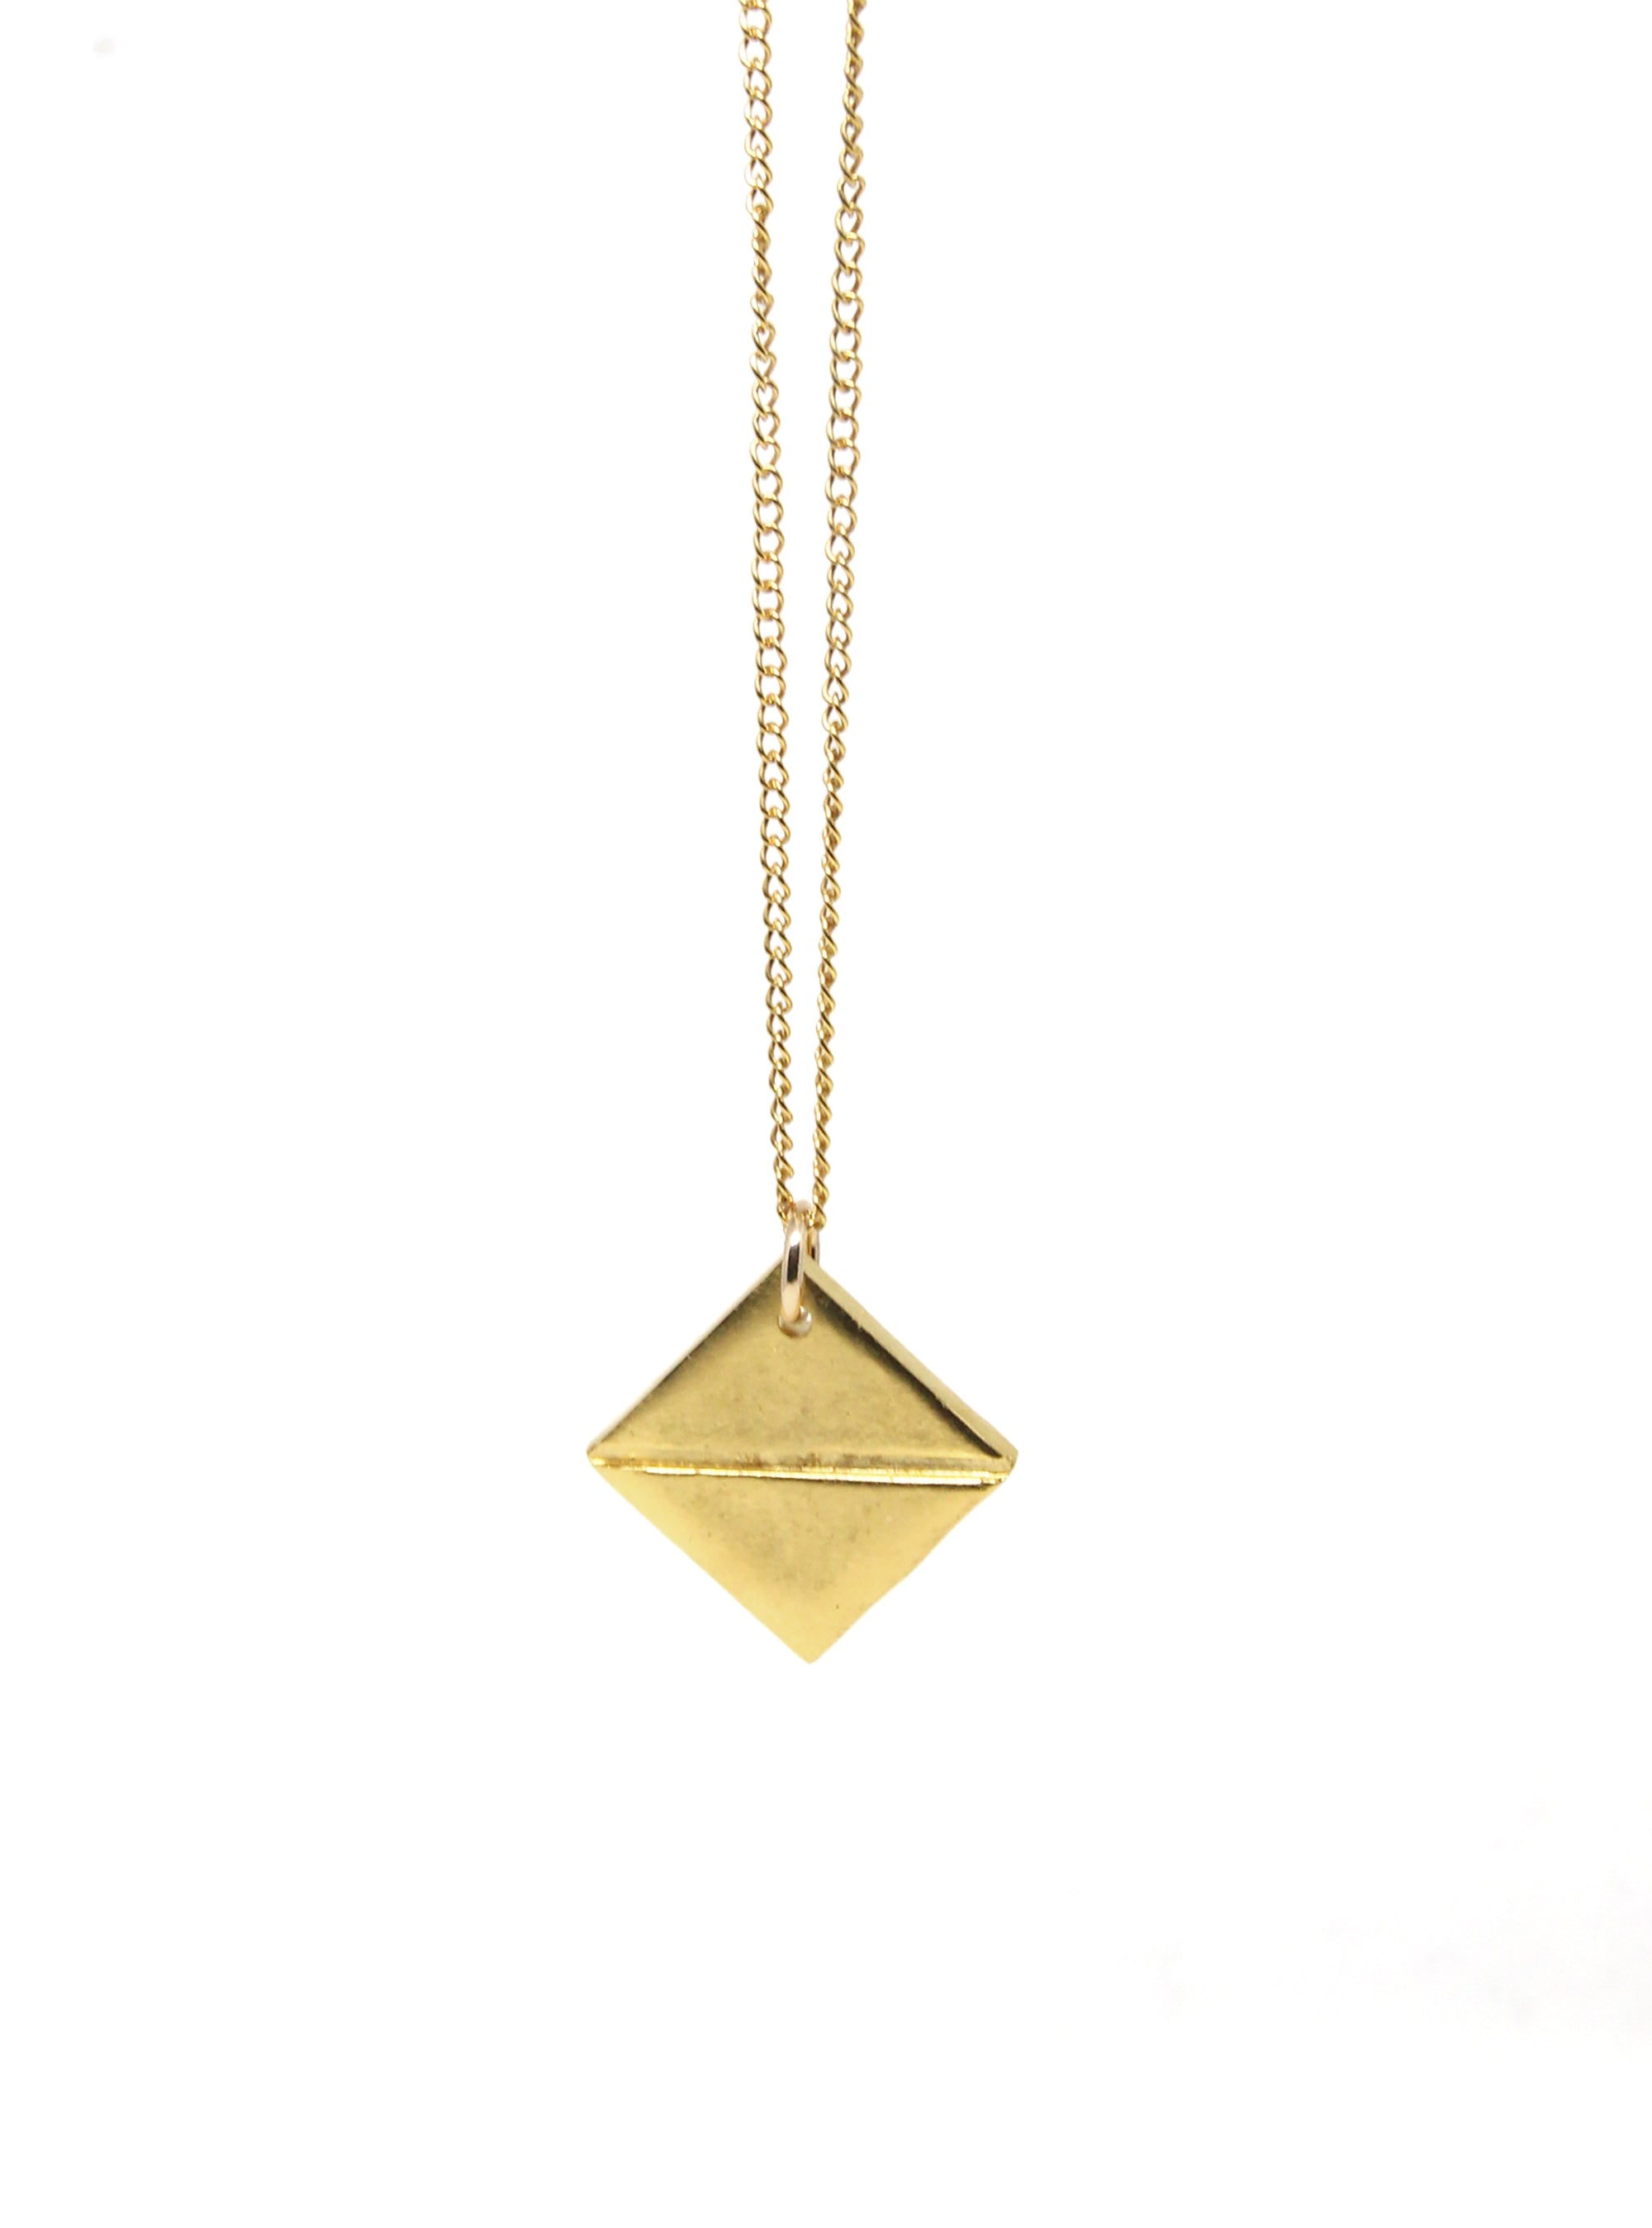 llayers-mens-women-jewelry-gold-talisman-pendant-synthesis-newyork-brooklyn-F3